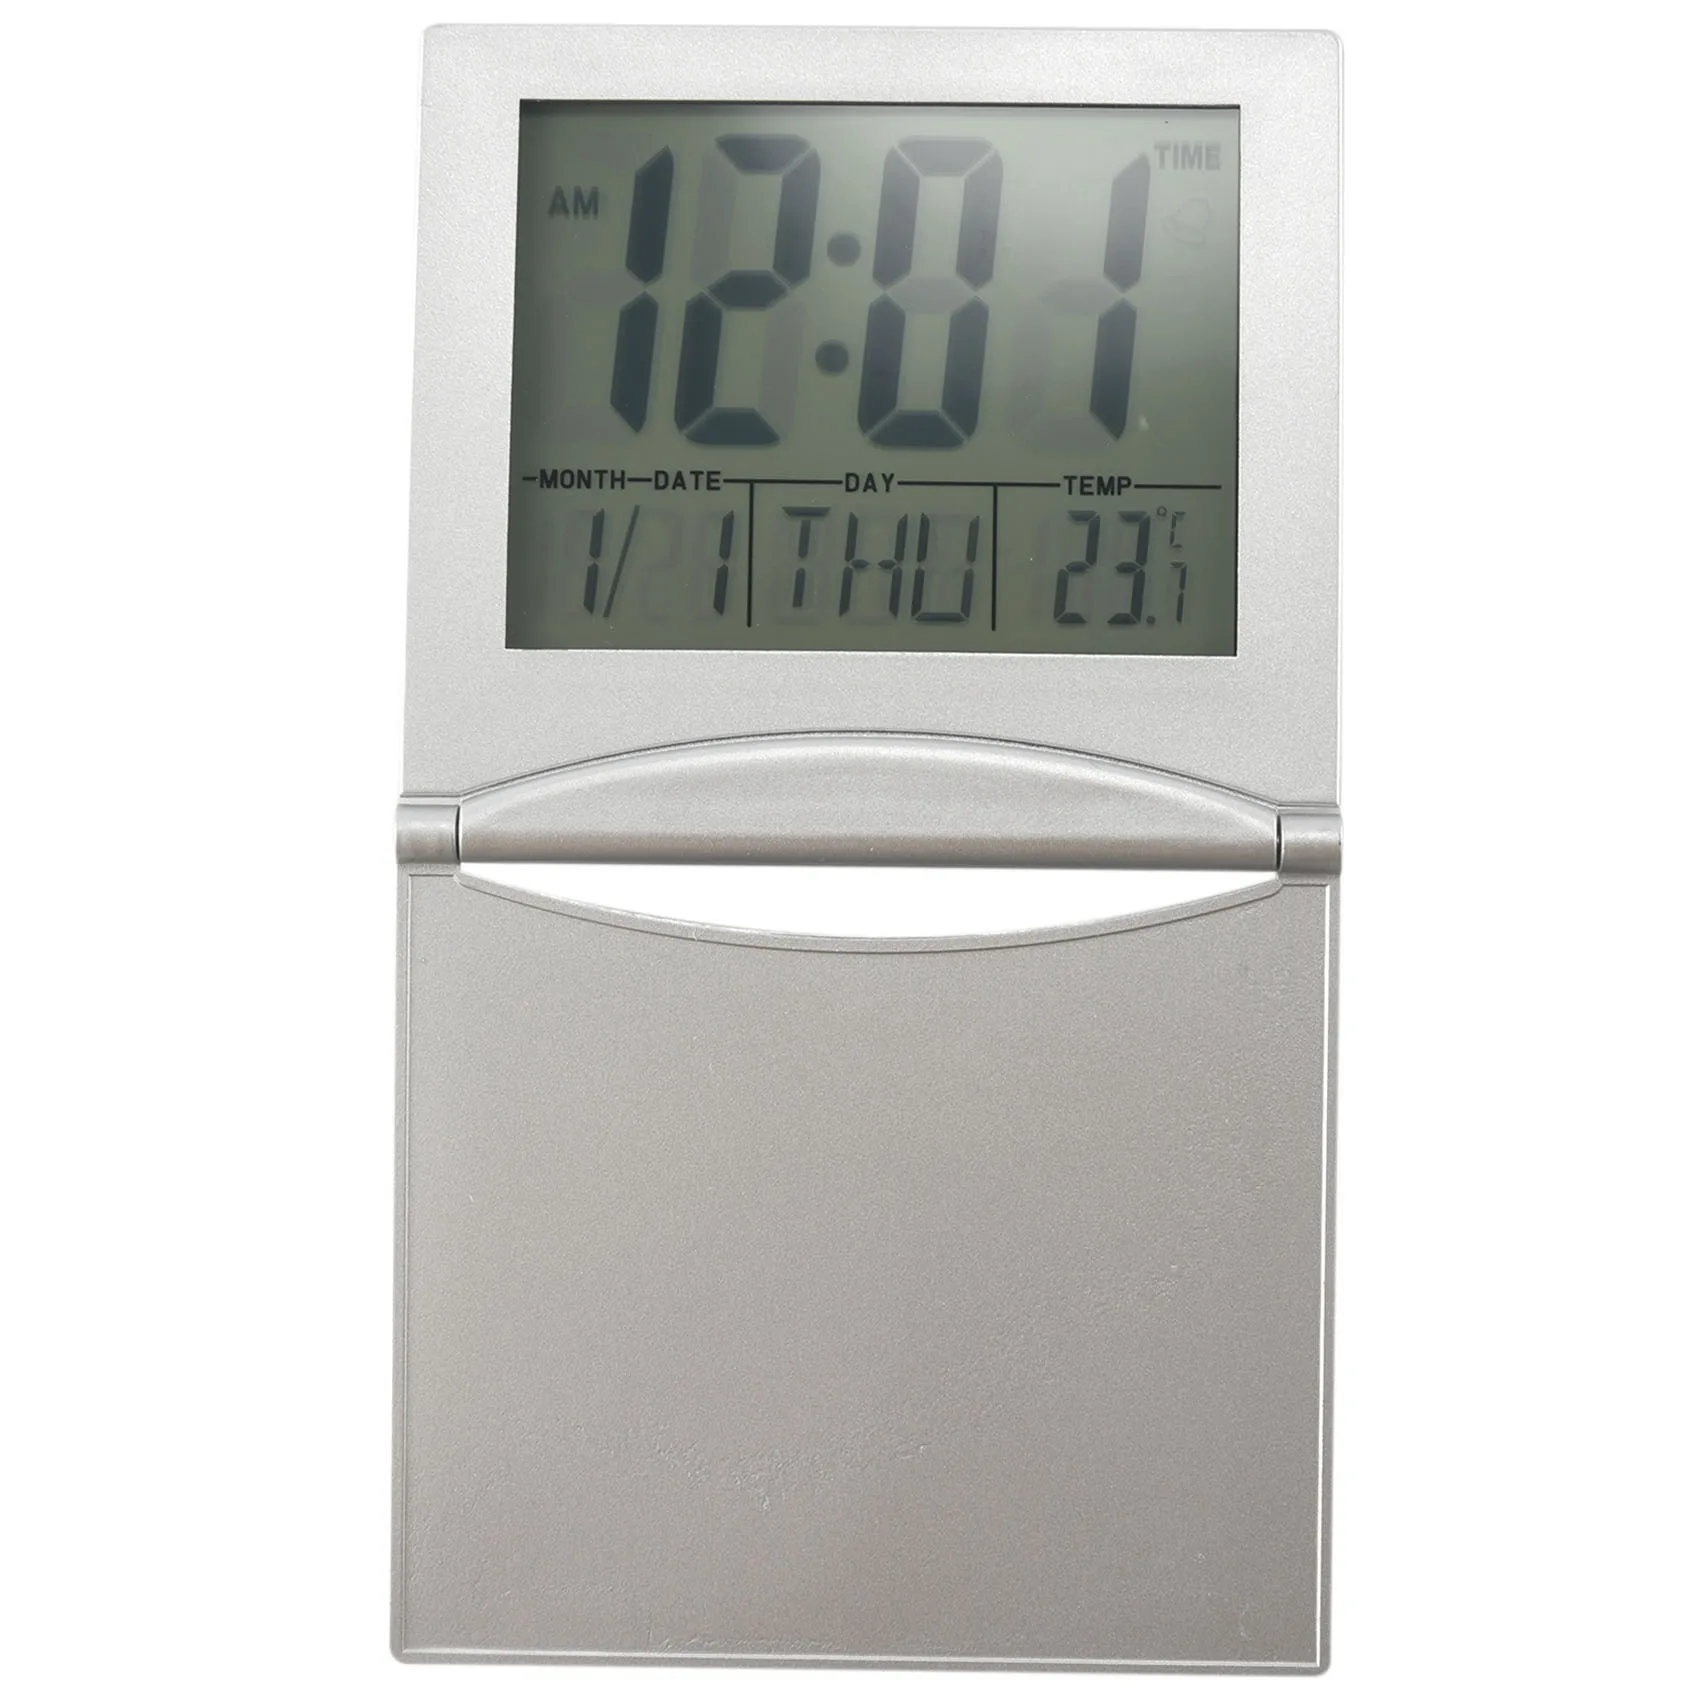 

Mini Travel Alarm Clock, Digital LCD Display Desk Foldable Clocks With Snooze Backlight Temperature Date Timer 12/24Hr